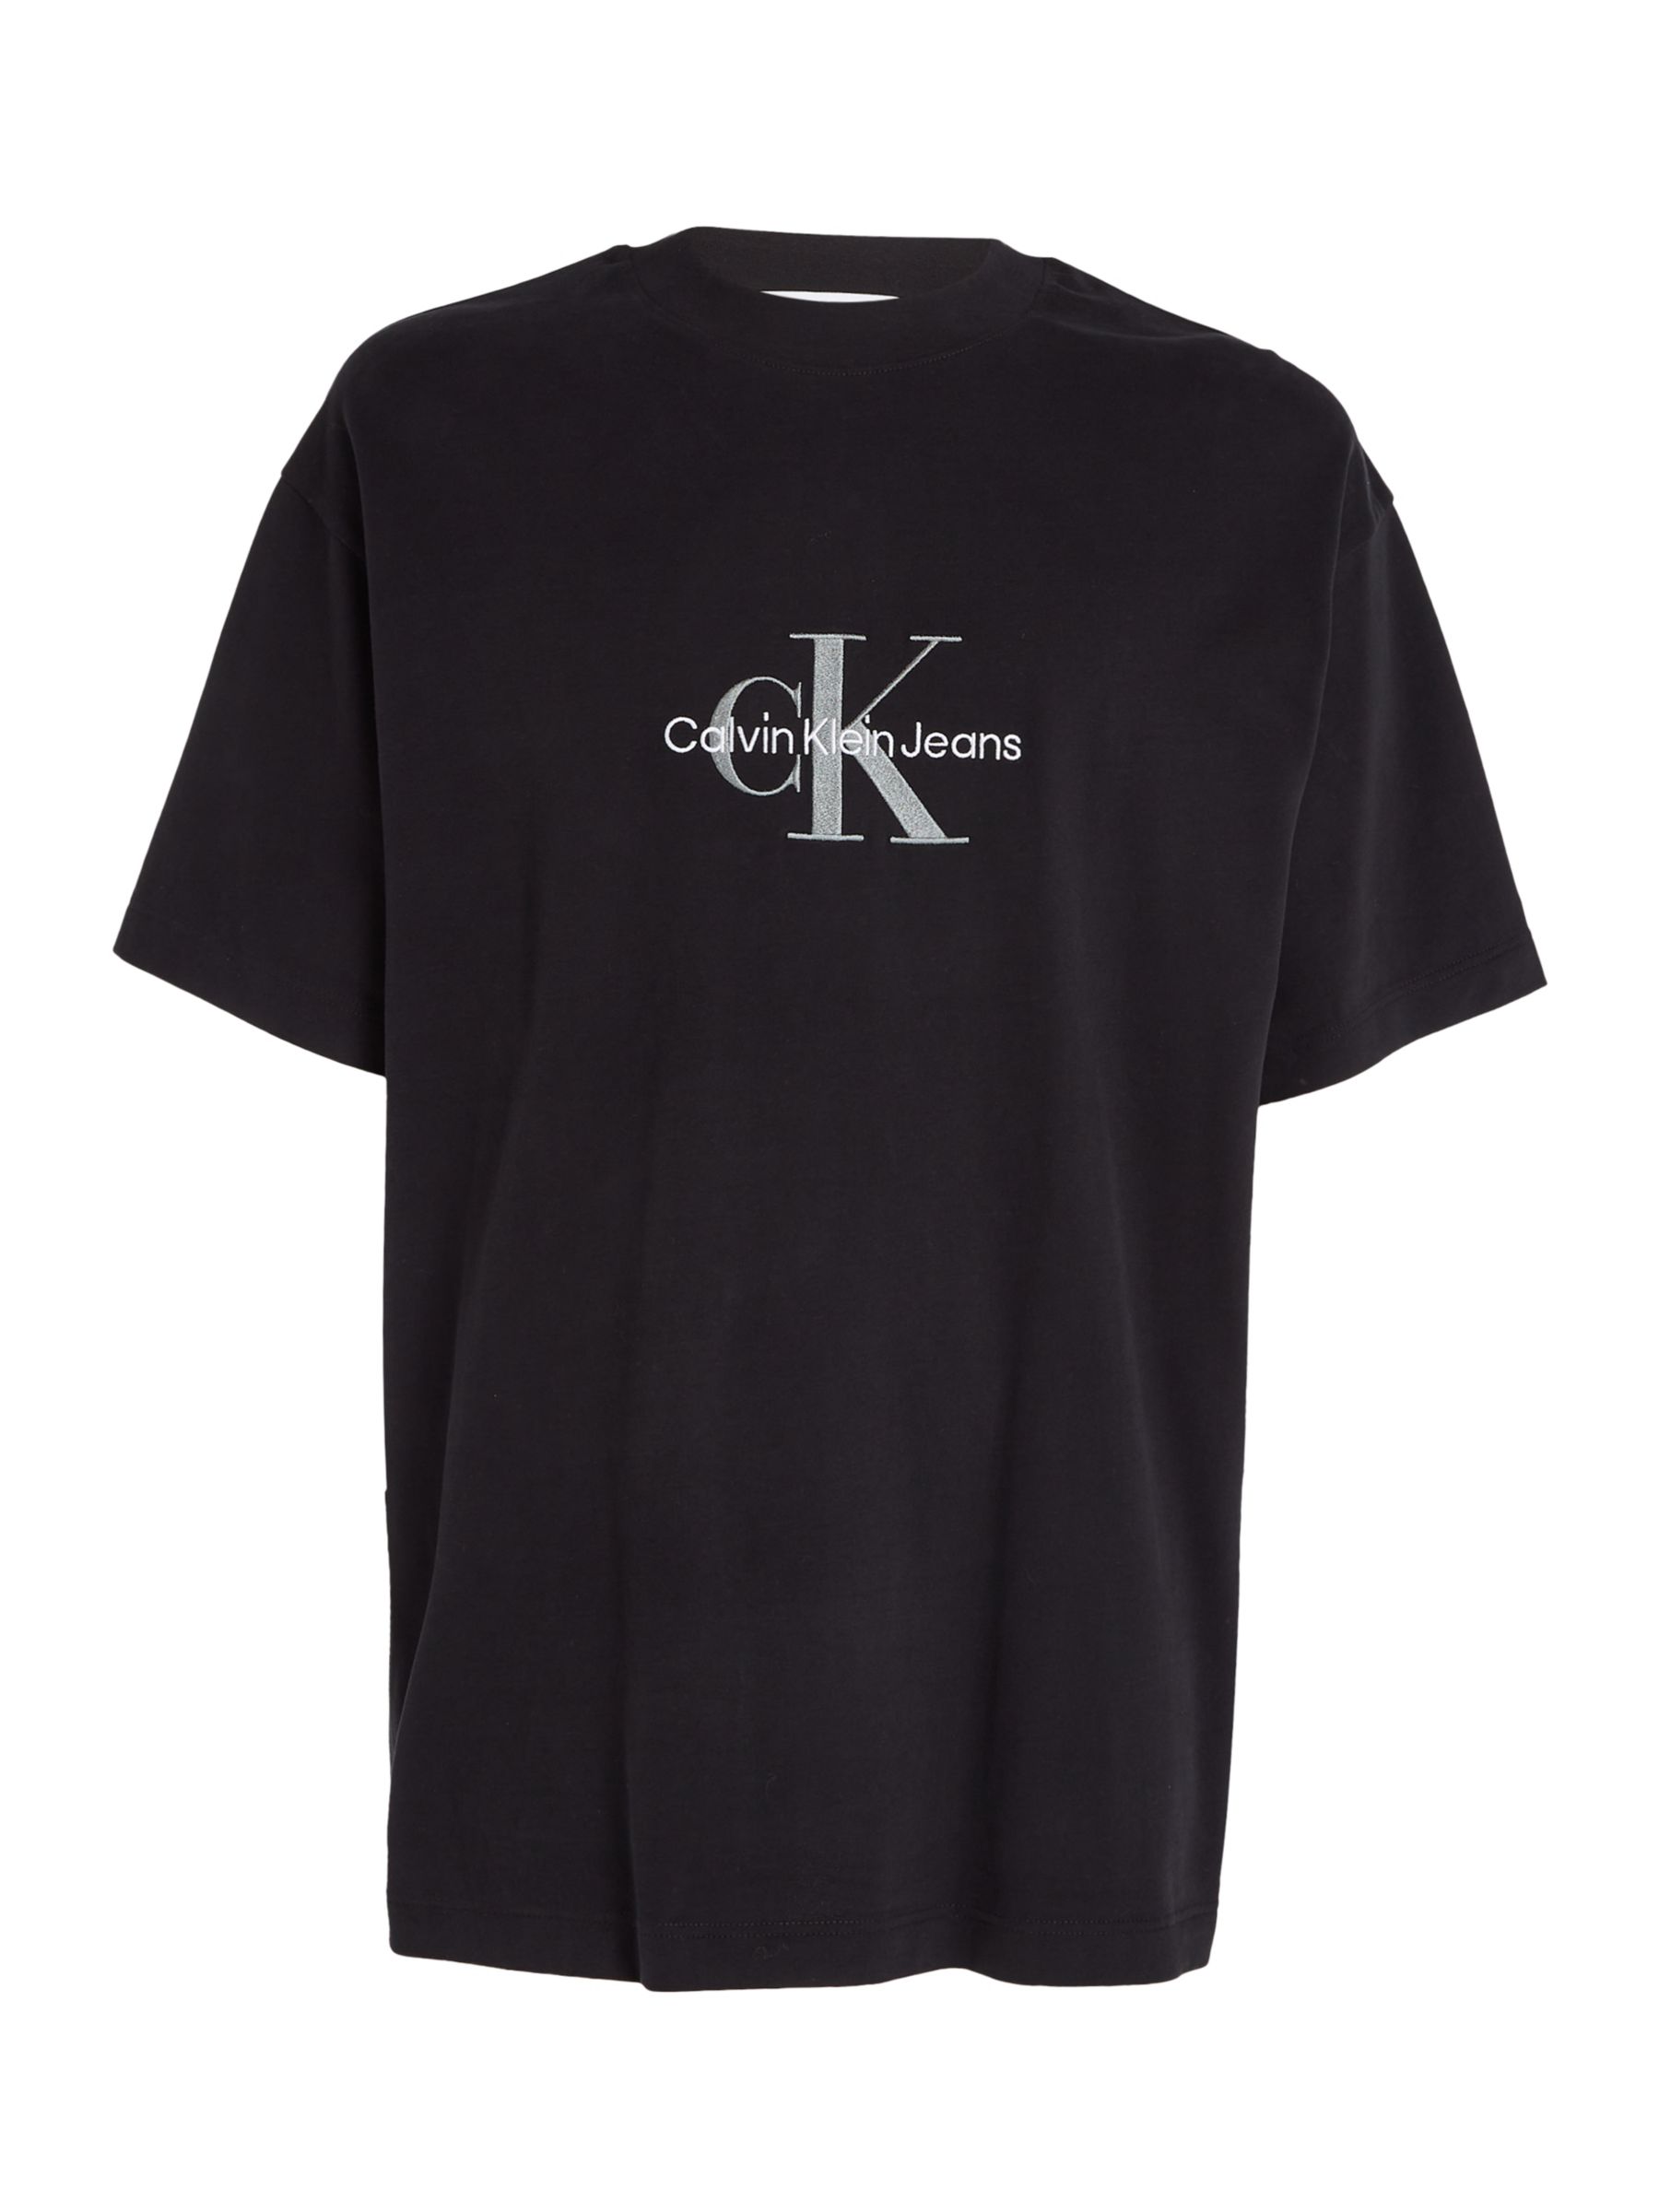 Calvin Klein Archive Logo T-Shirt, Black at John Lewis & Partners